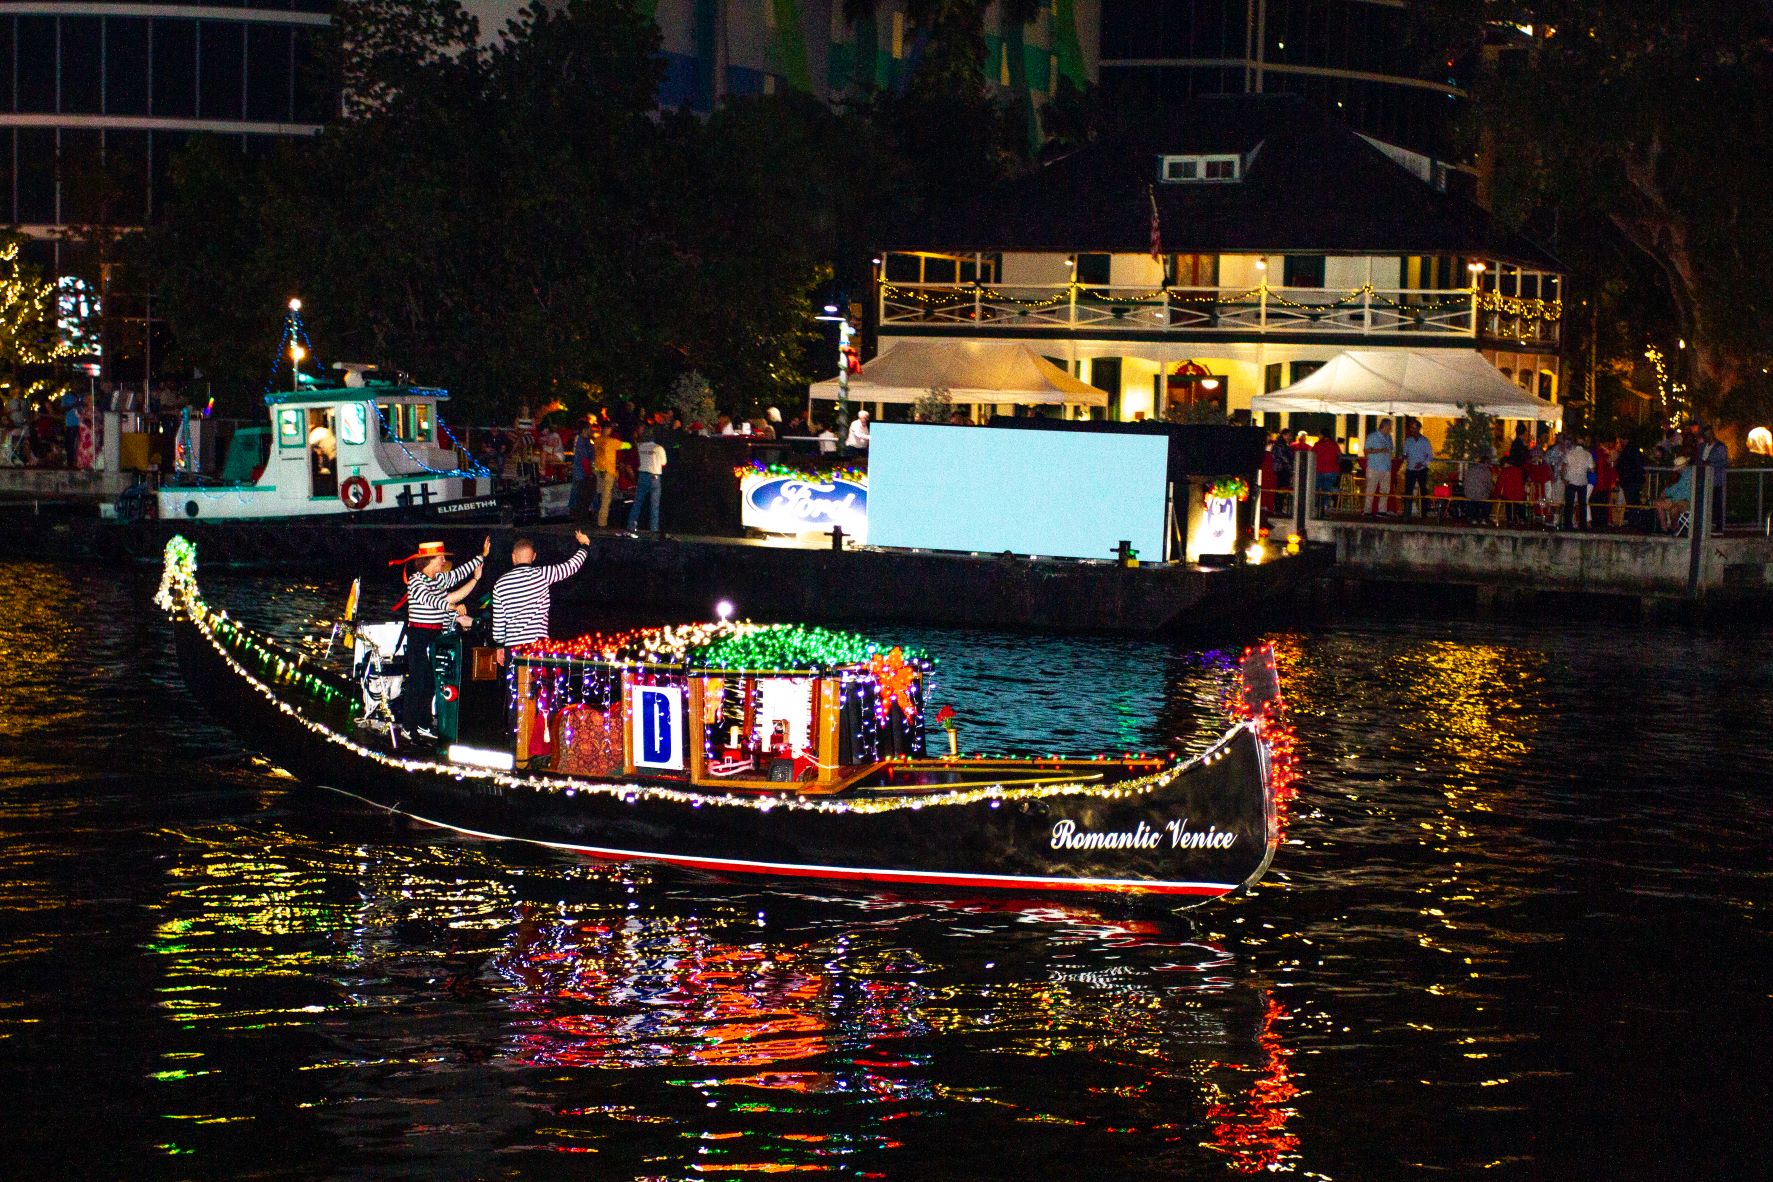 Romantic Venice, boat D in the 2021 Winterfest Boat Parade